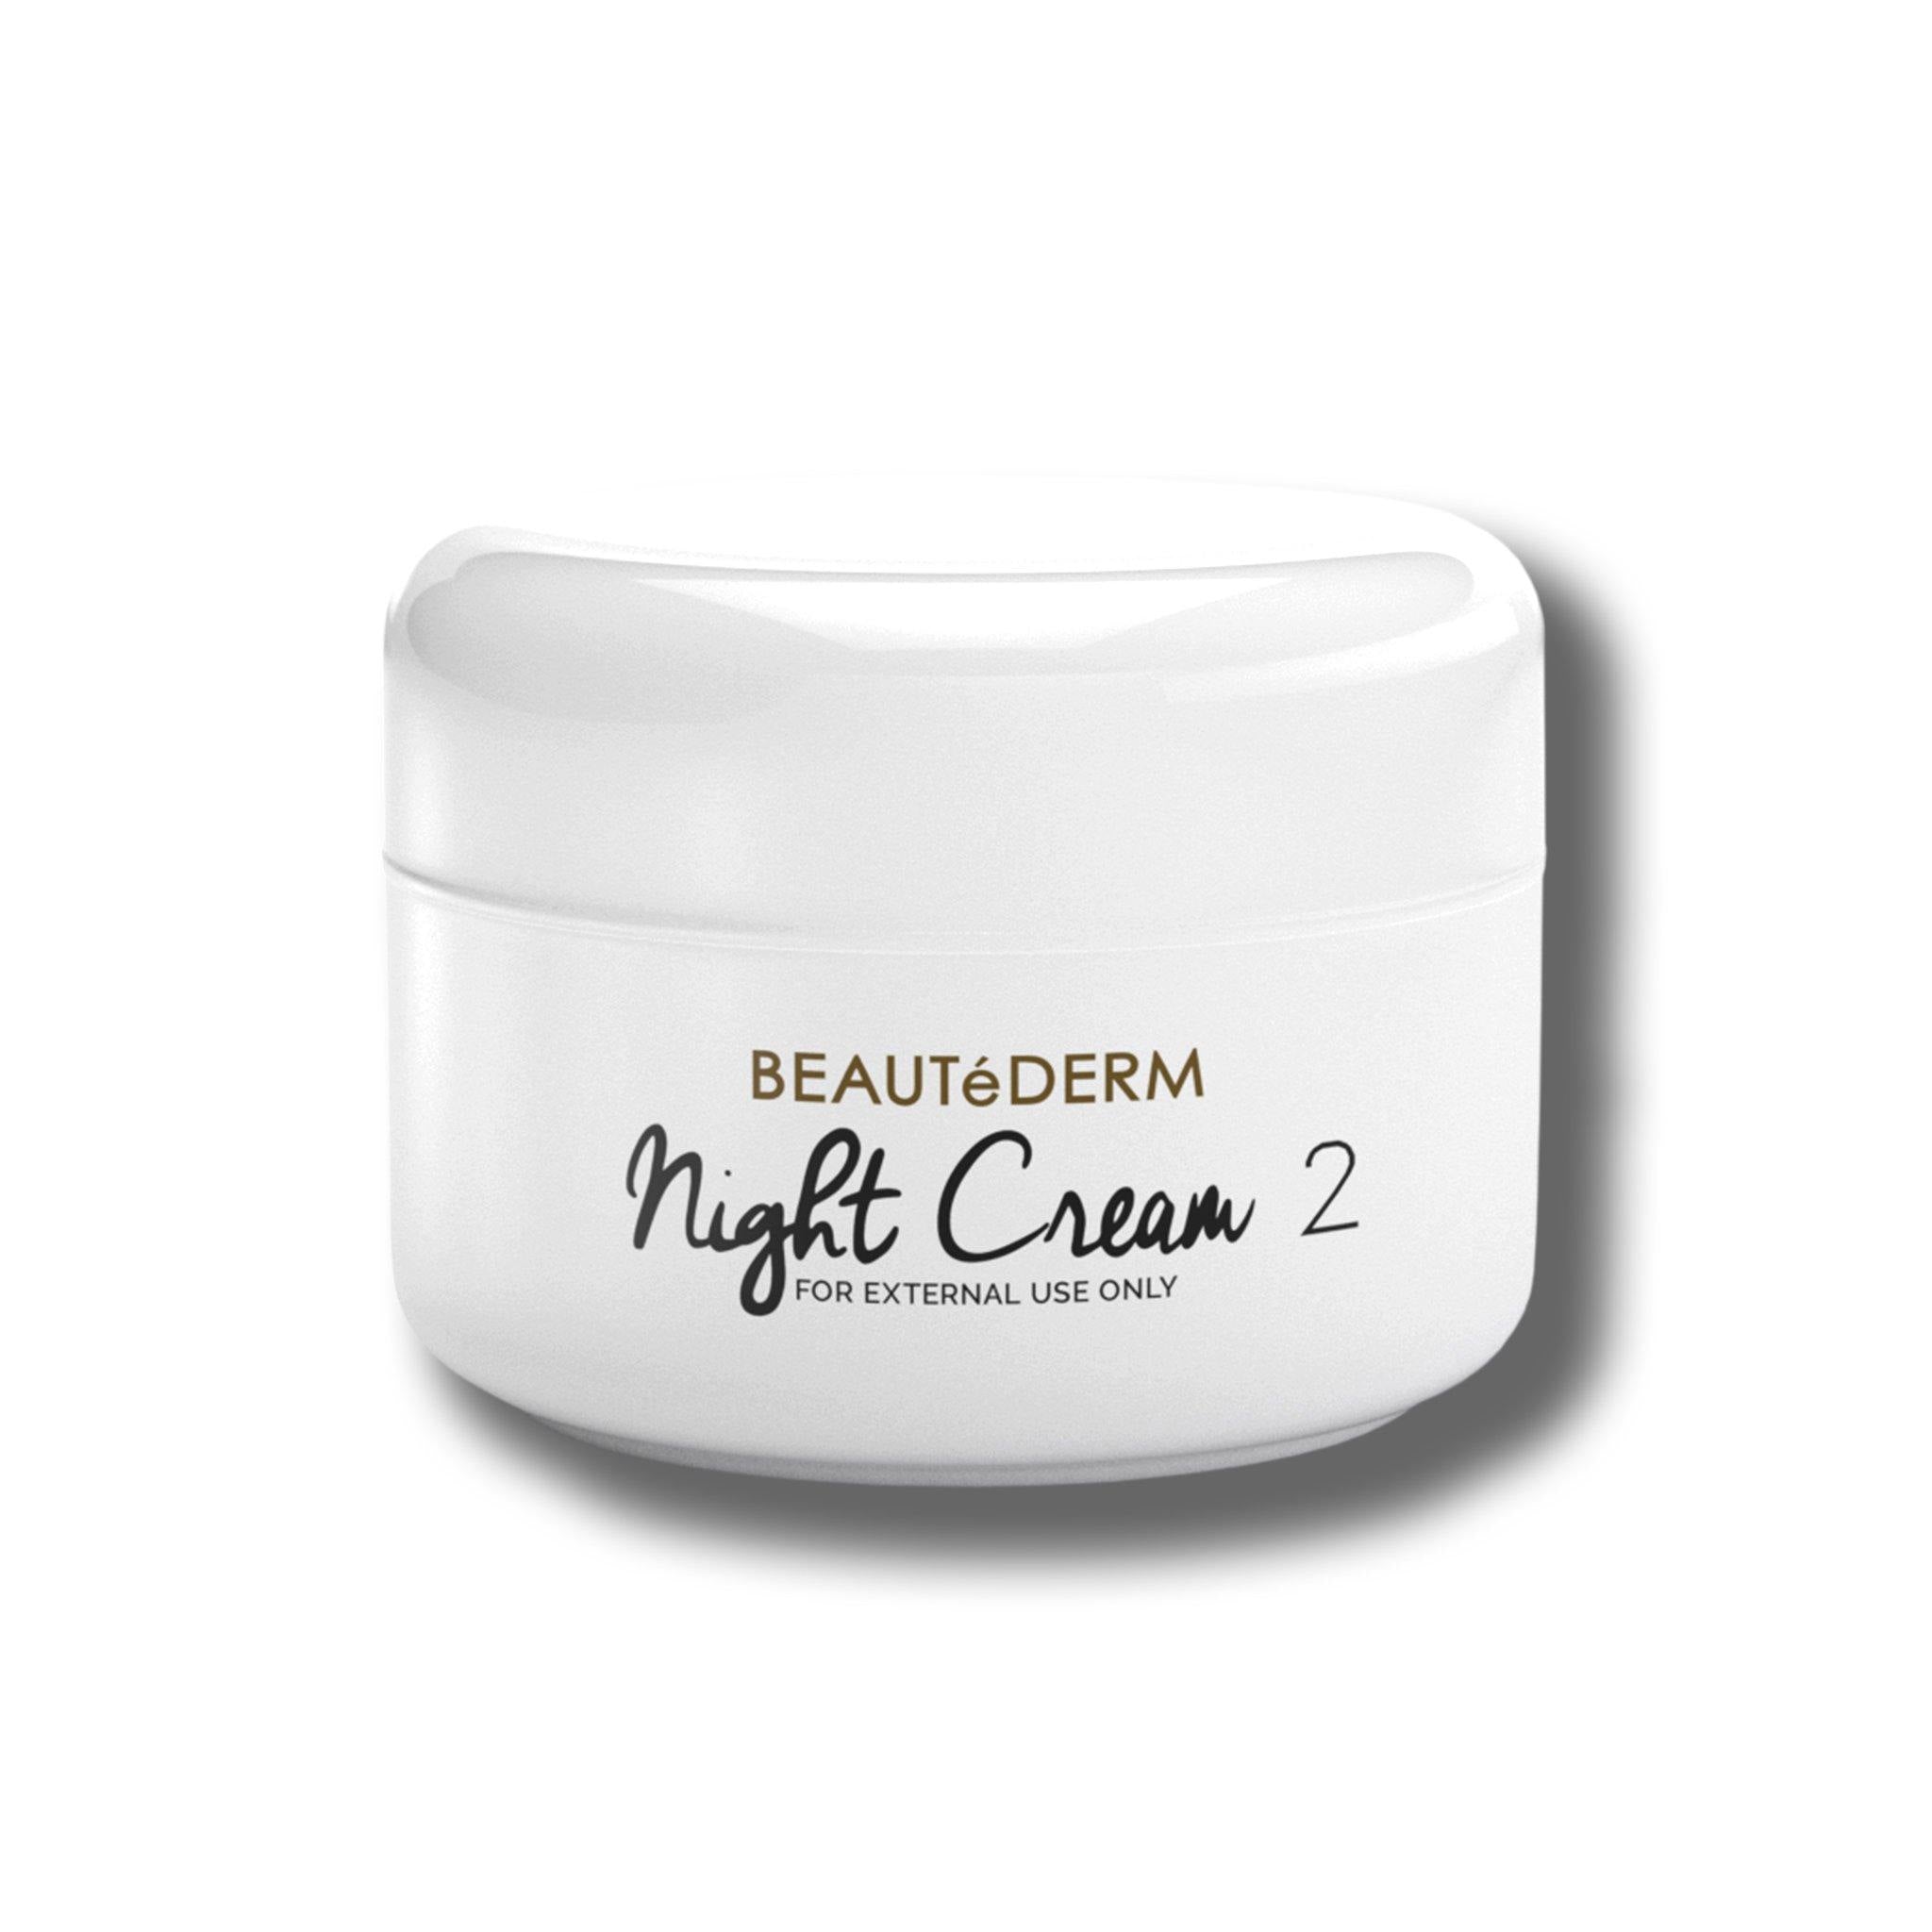 Night Cream 2, Moisturizing, 20g, by Beautederm